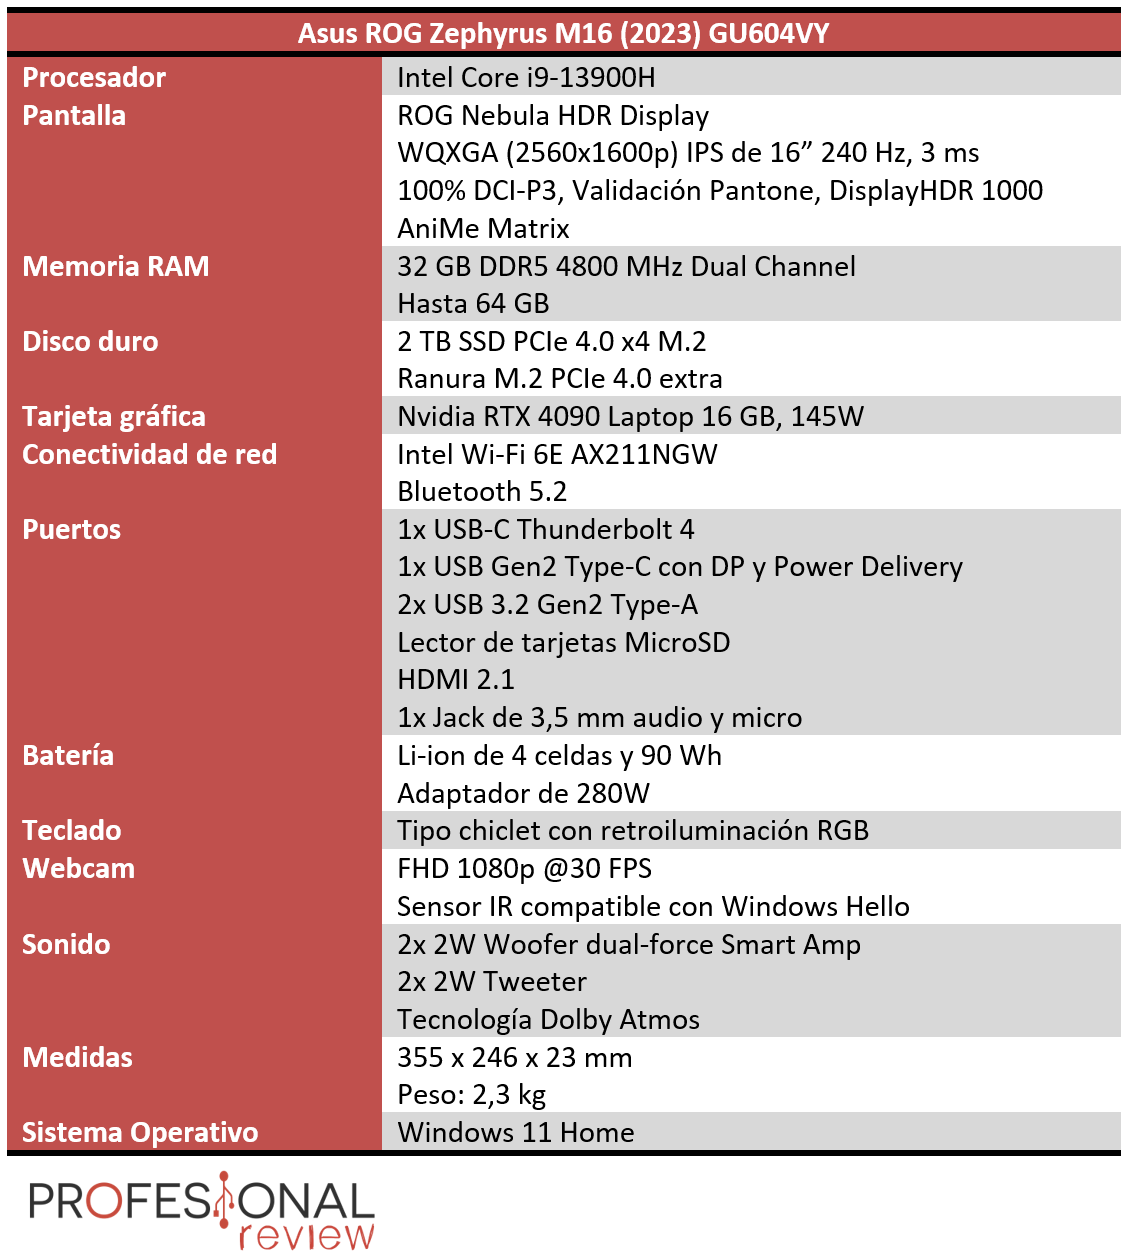 Asus ROG Zephyrus M16 2023 Características